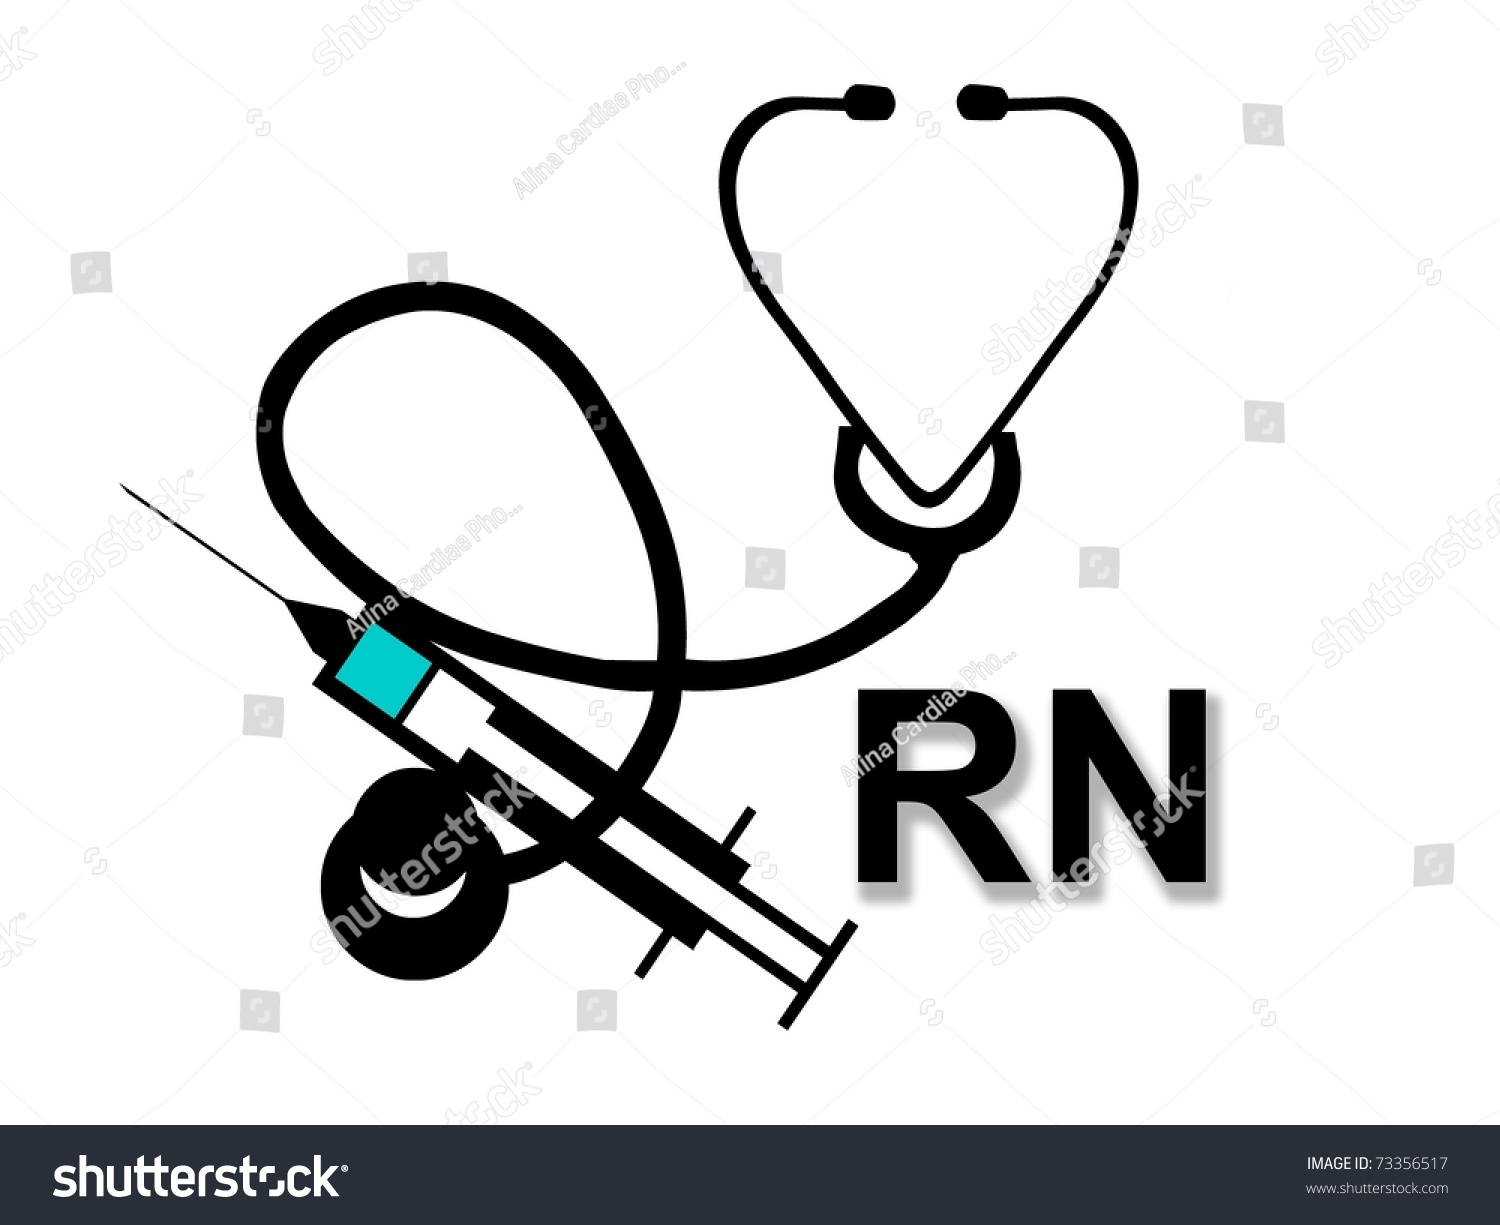 Registered Nurse Rn Stock Illustration 73356517 - Shutterstock